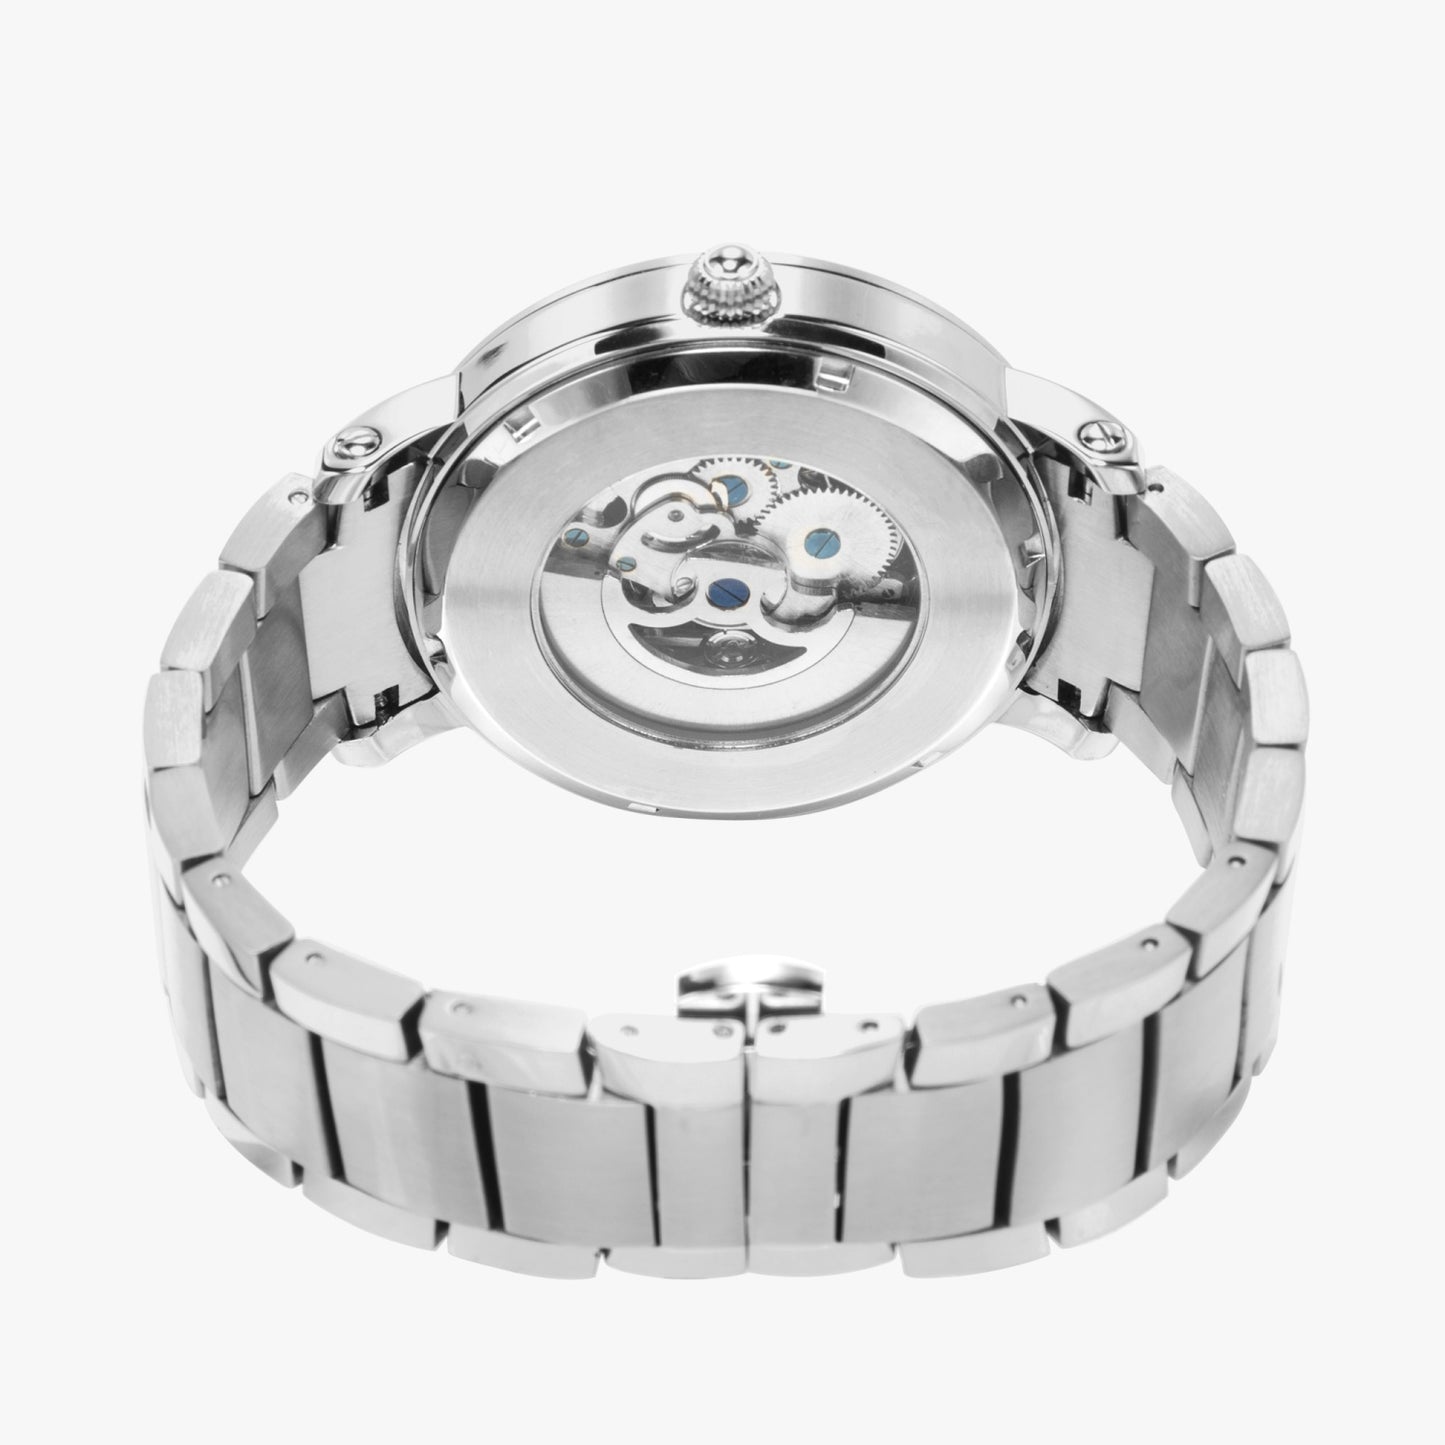 Sicilia Italia Automatic Movement Watch - Premium Stainless Steel